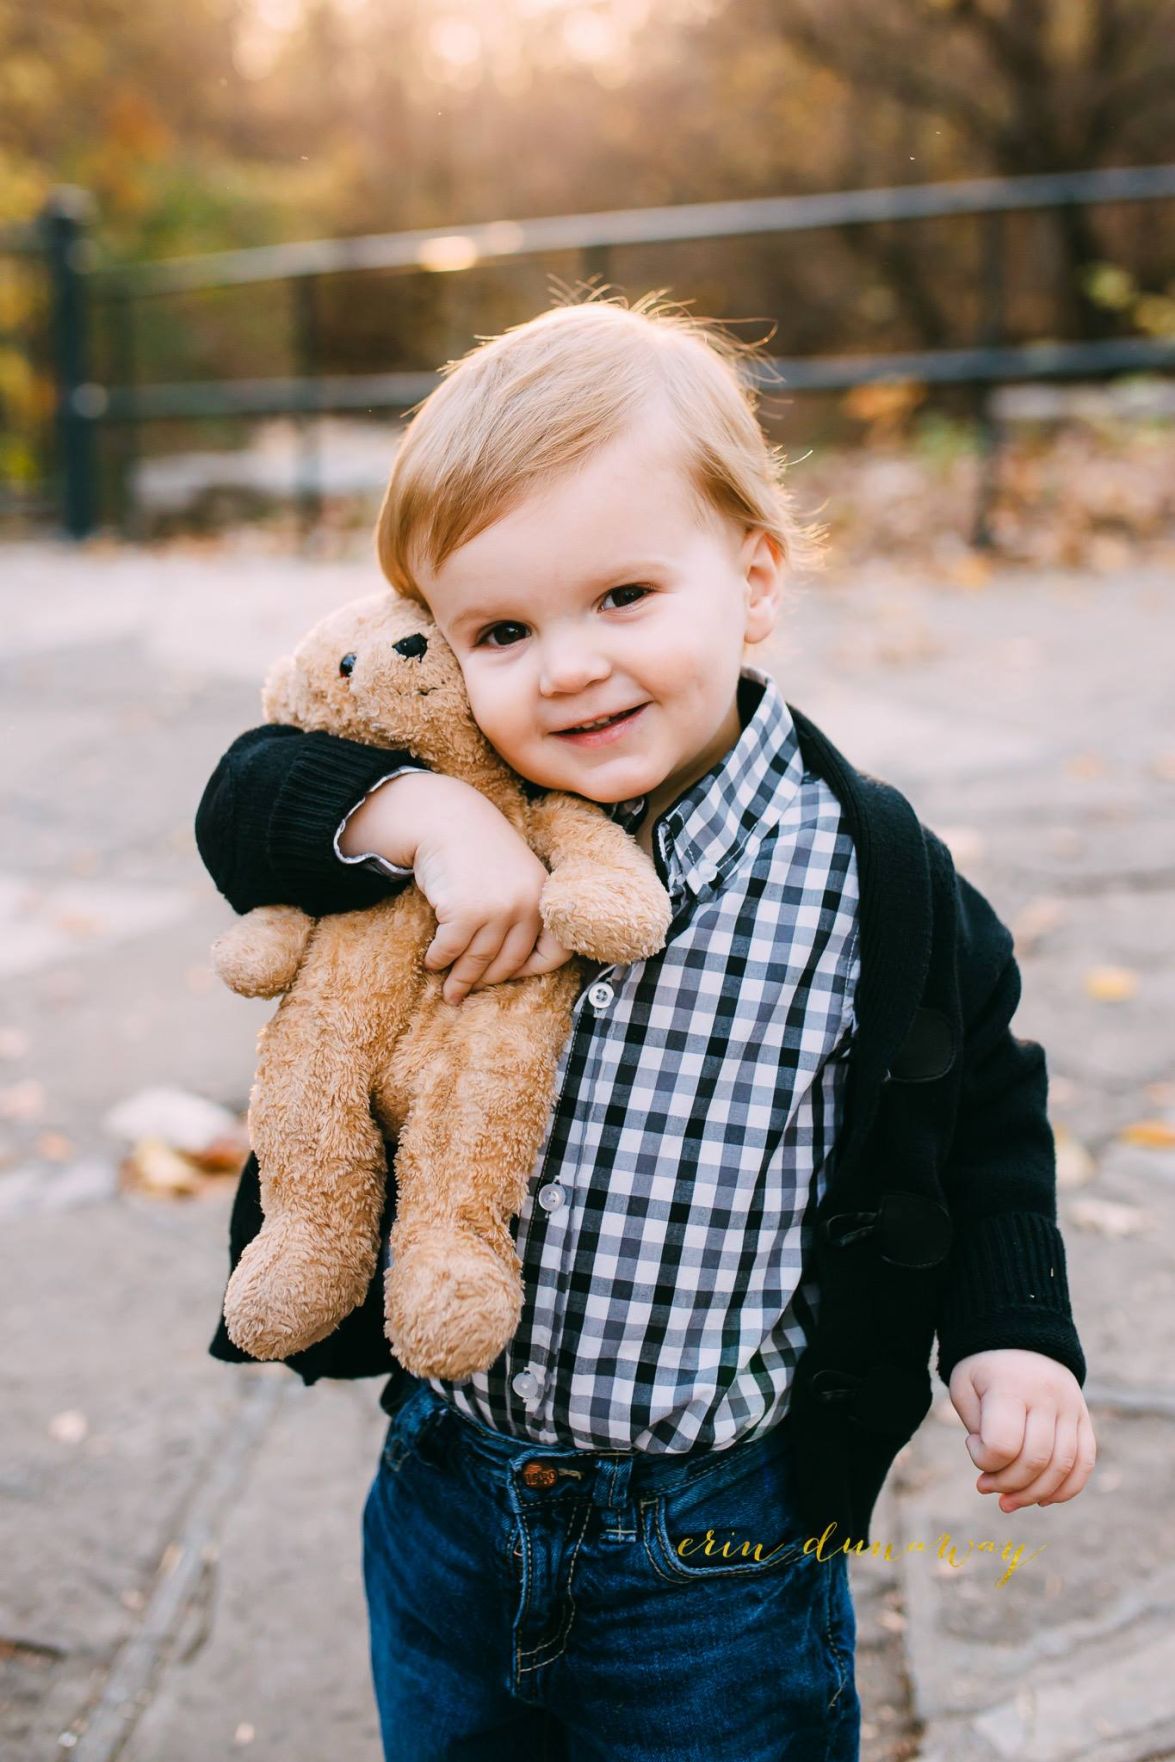 child with stuffed animal